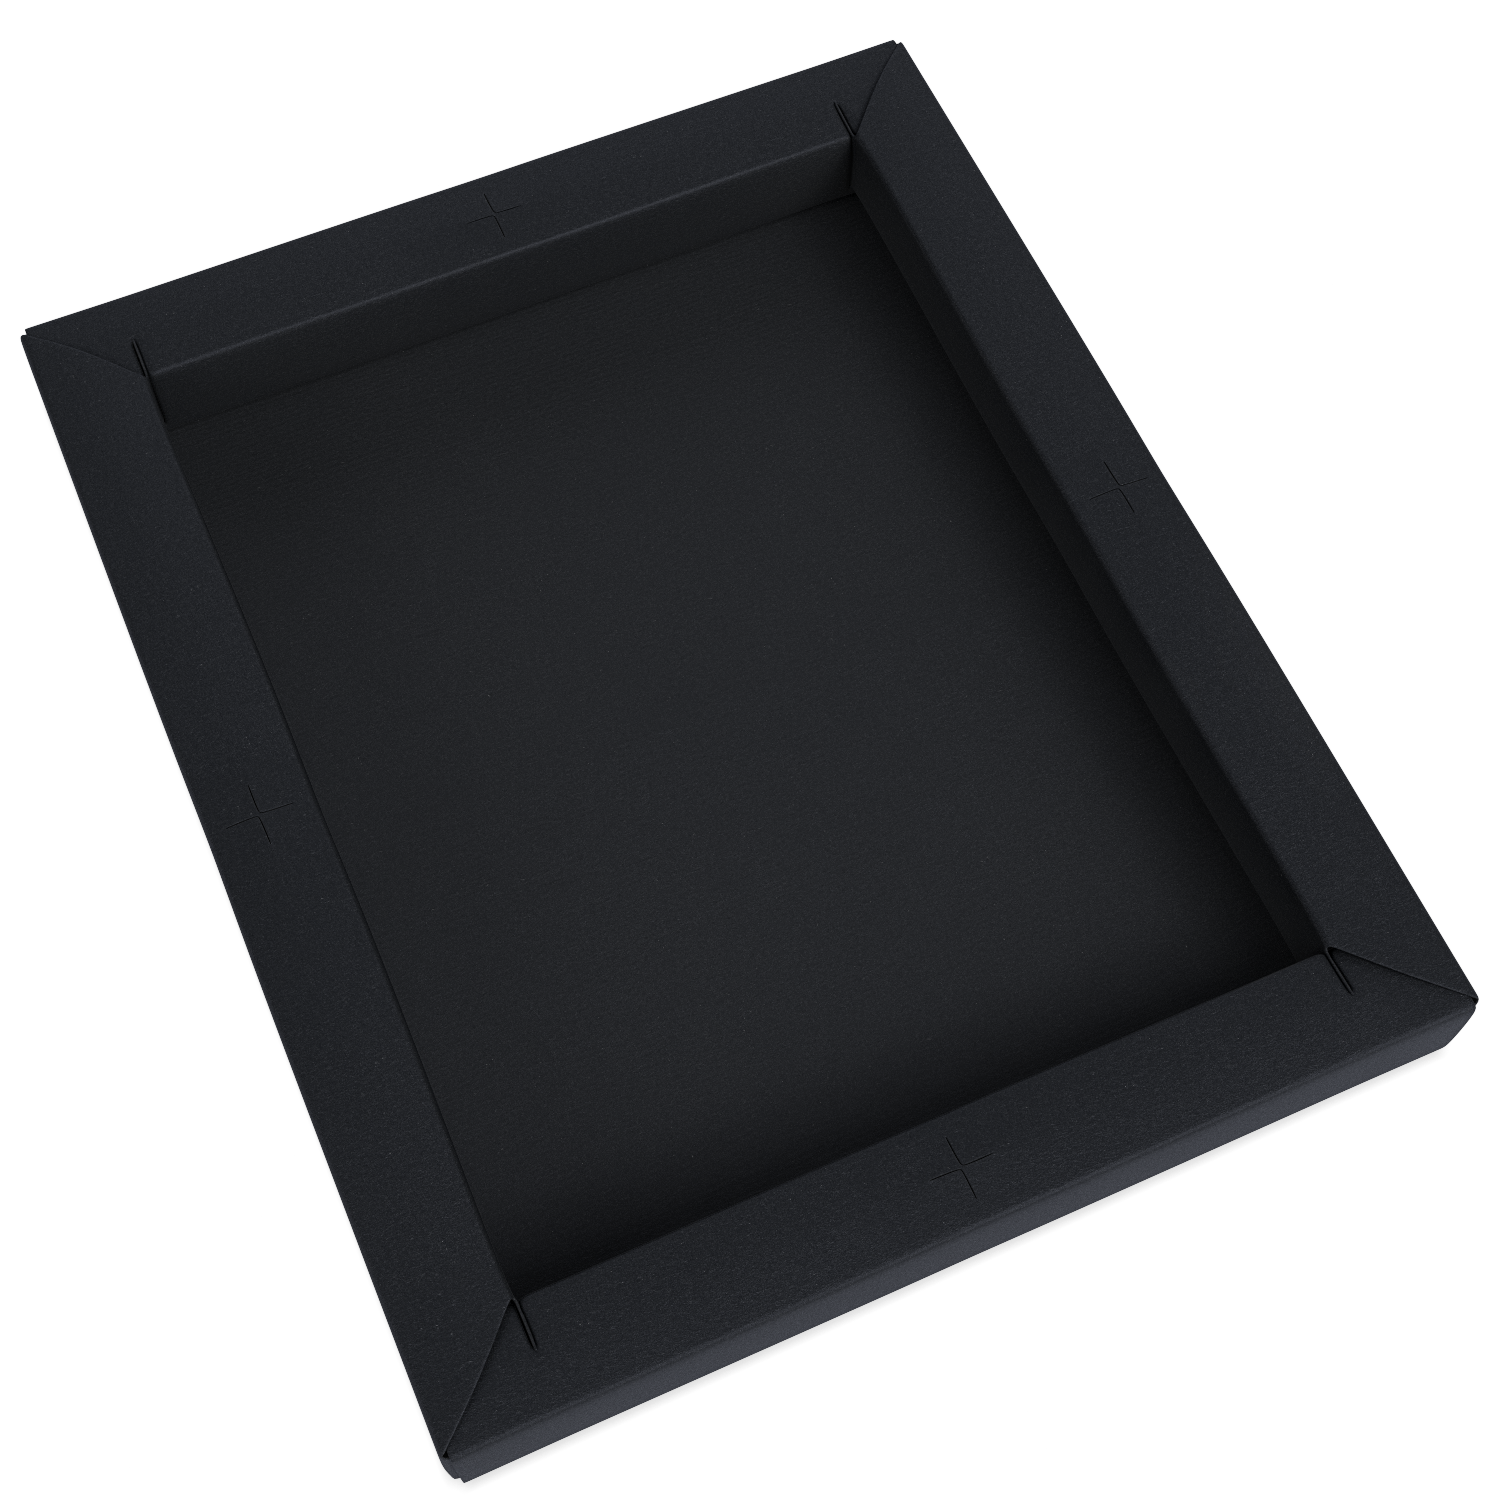 Arteza DIY Foldable 9x9 Canvas Frame, Black - 5 Sheets